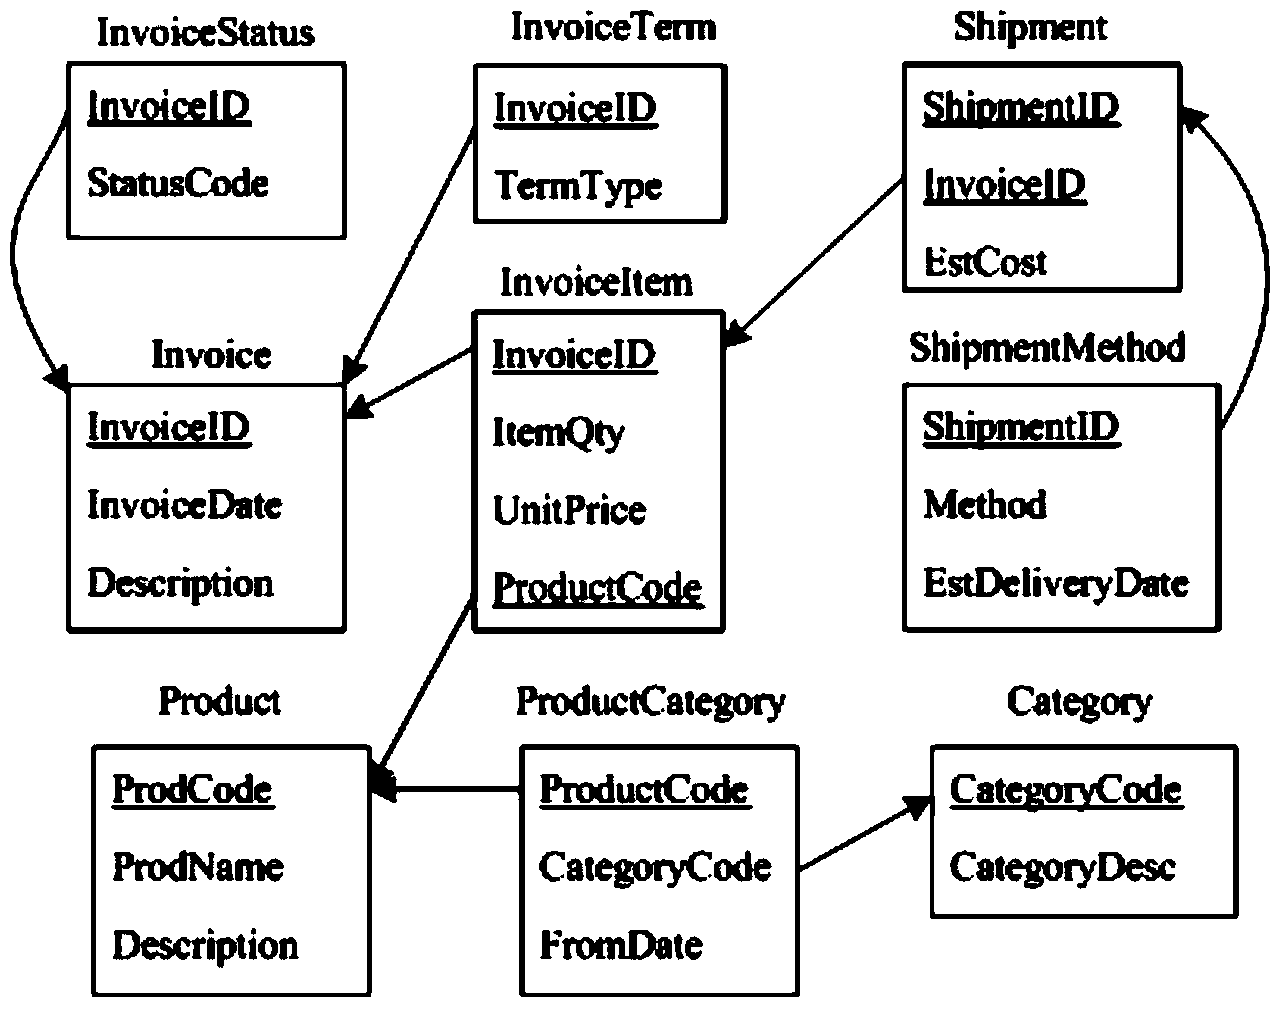 Database mode abstract generation method based on label propagation